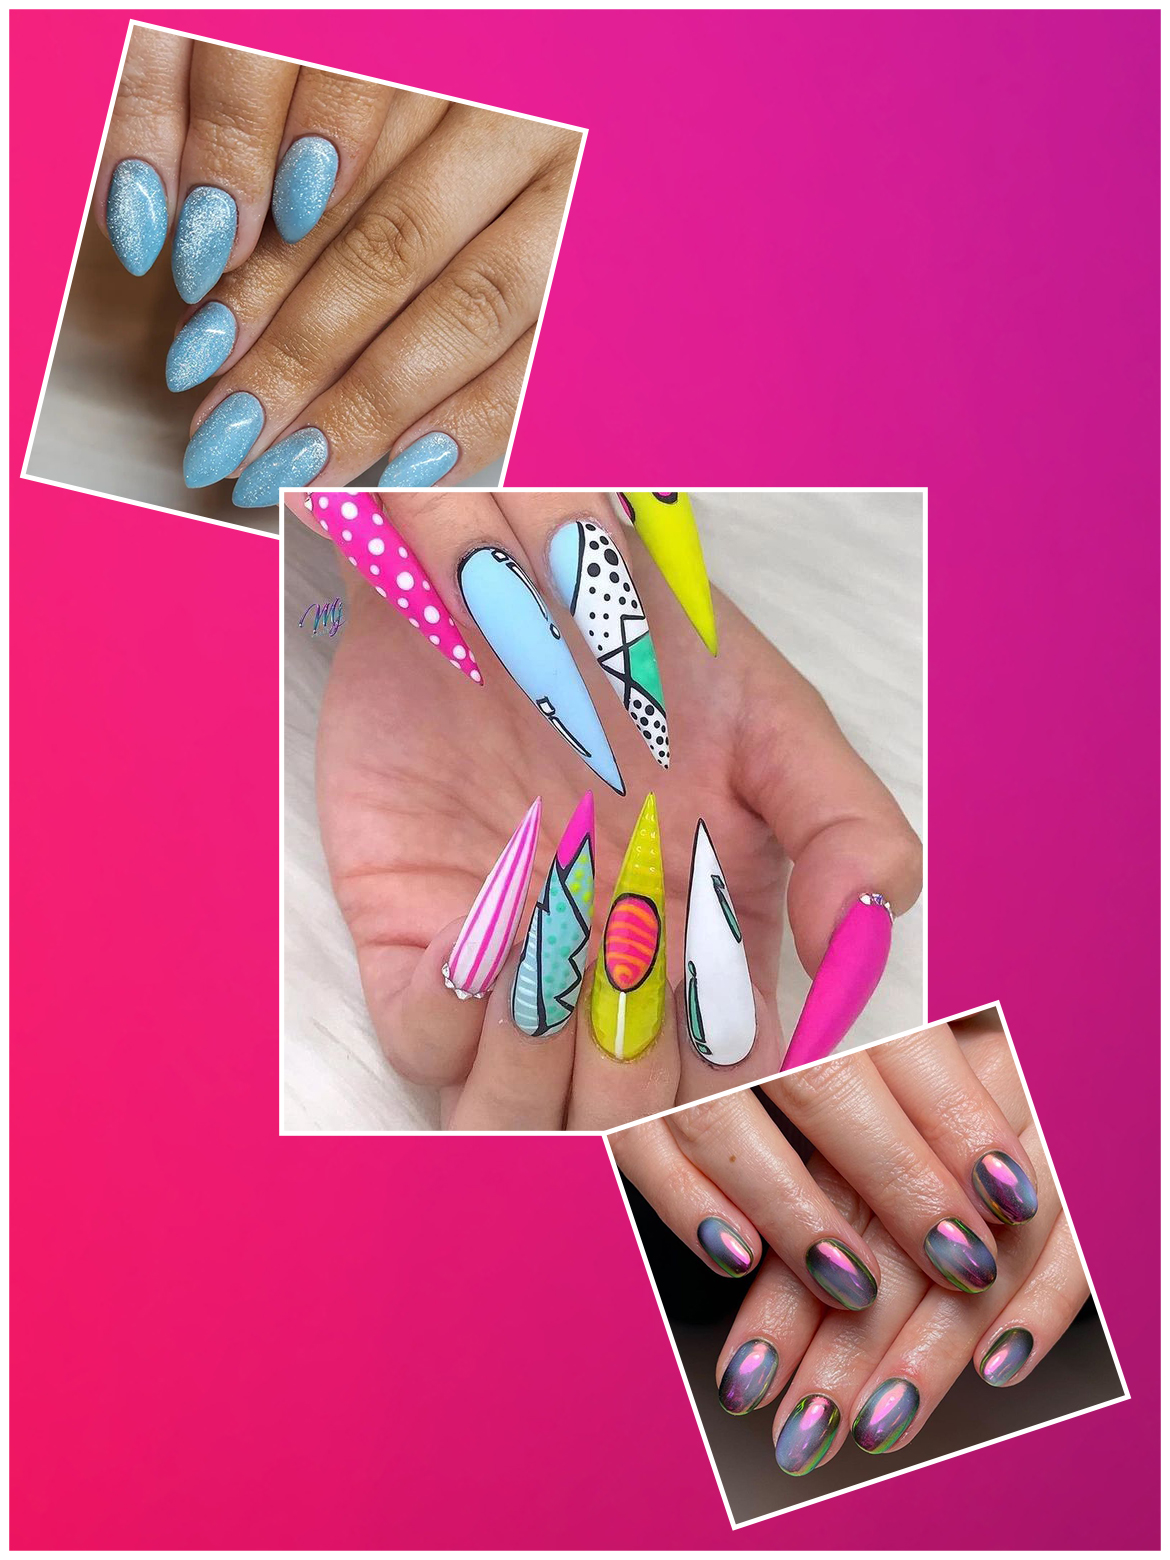 Beautiful blue nail manicure. Stylish pastel blue manicure. Nail polish. Art  blue manicure. Female hands manicure close up view on blue denim jacket  background. Stock Photo | Adobe Stock